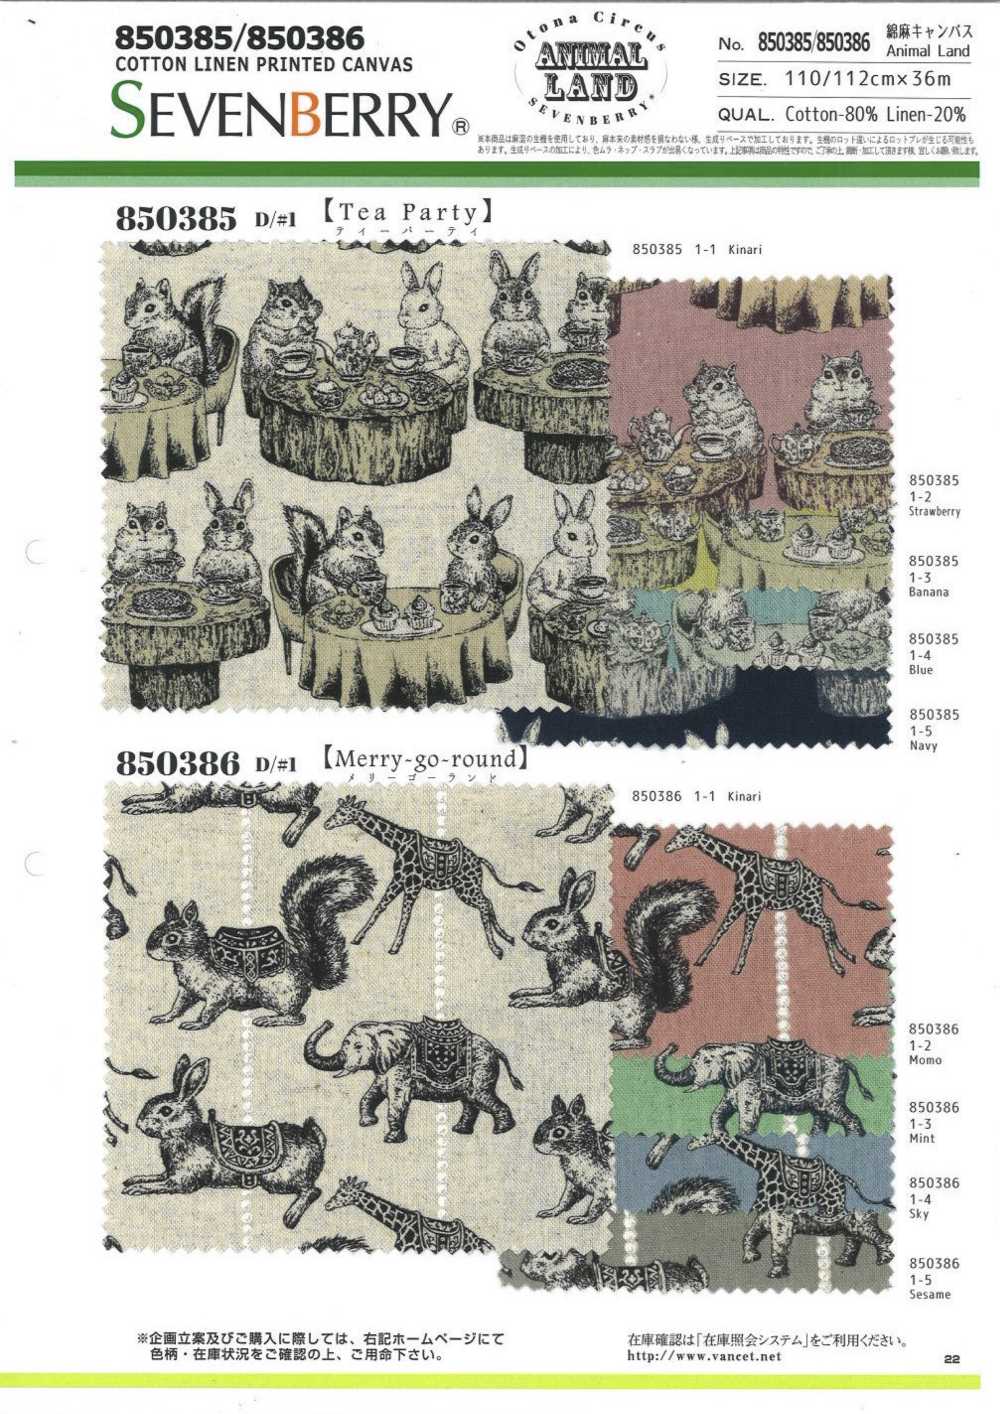 850386 Linen Linen Canvas Animal Land Merry-go-round[Textile / Fabric] VANCET